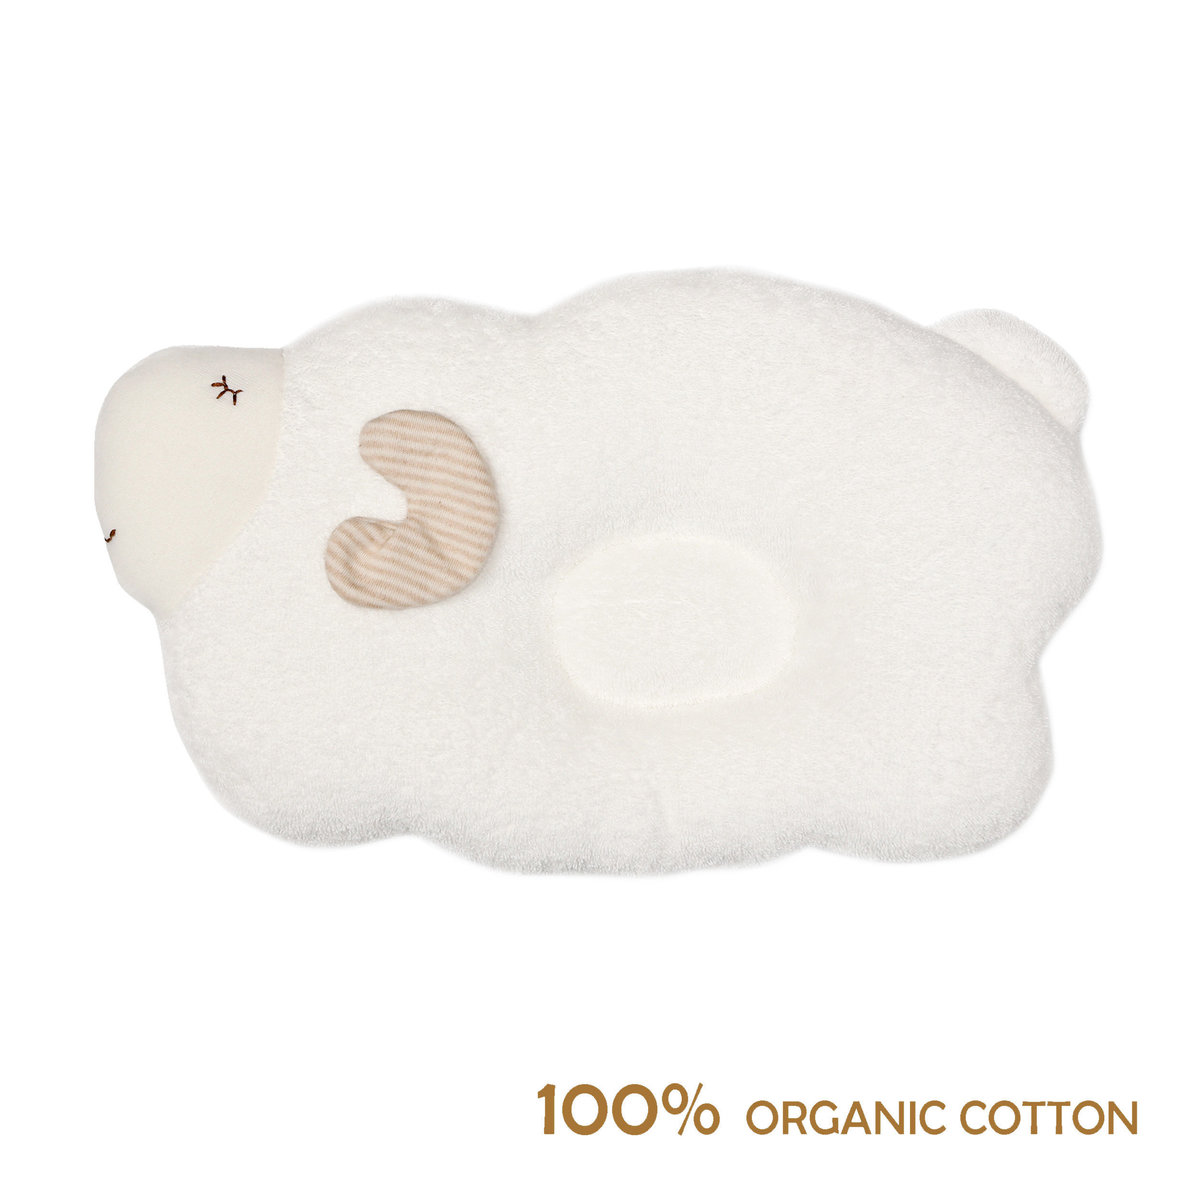 Classic Sheep 100% Organic Cotton Pillow